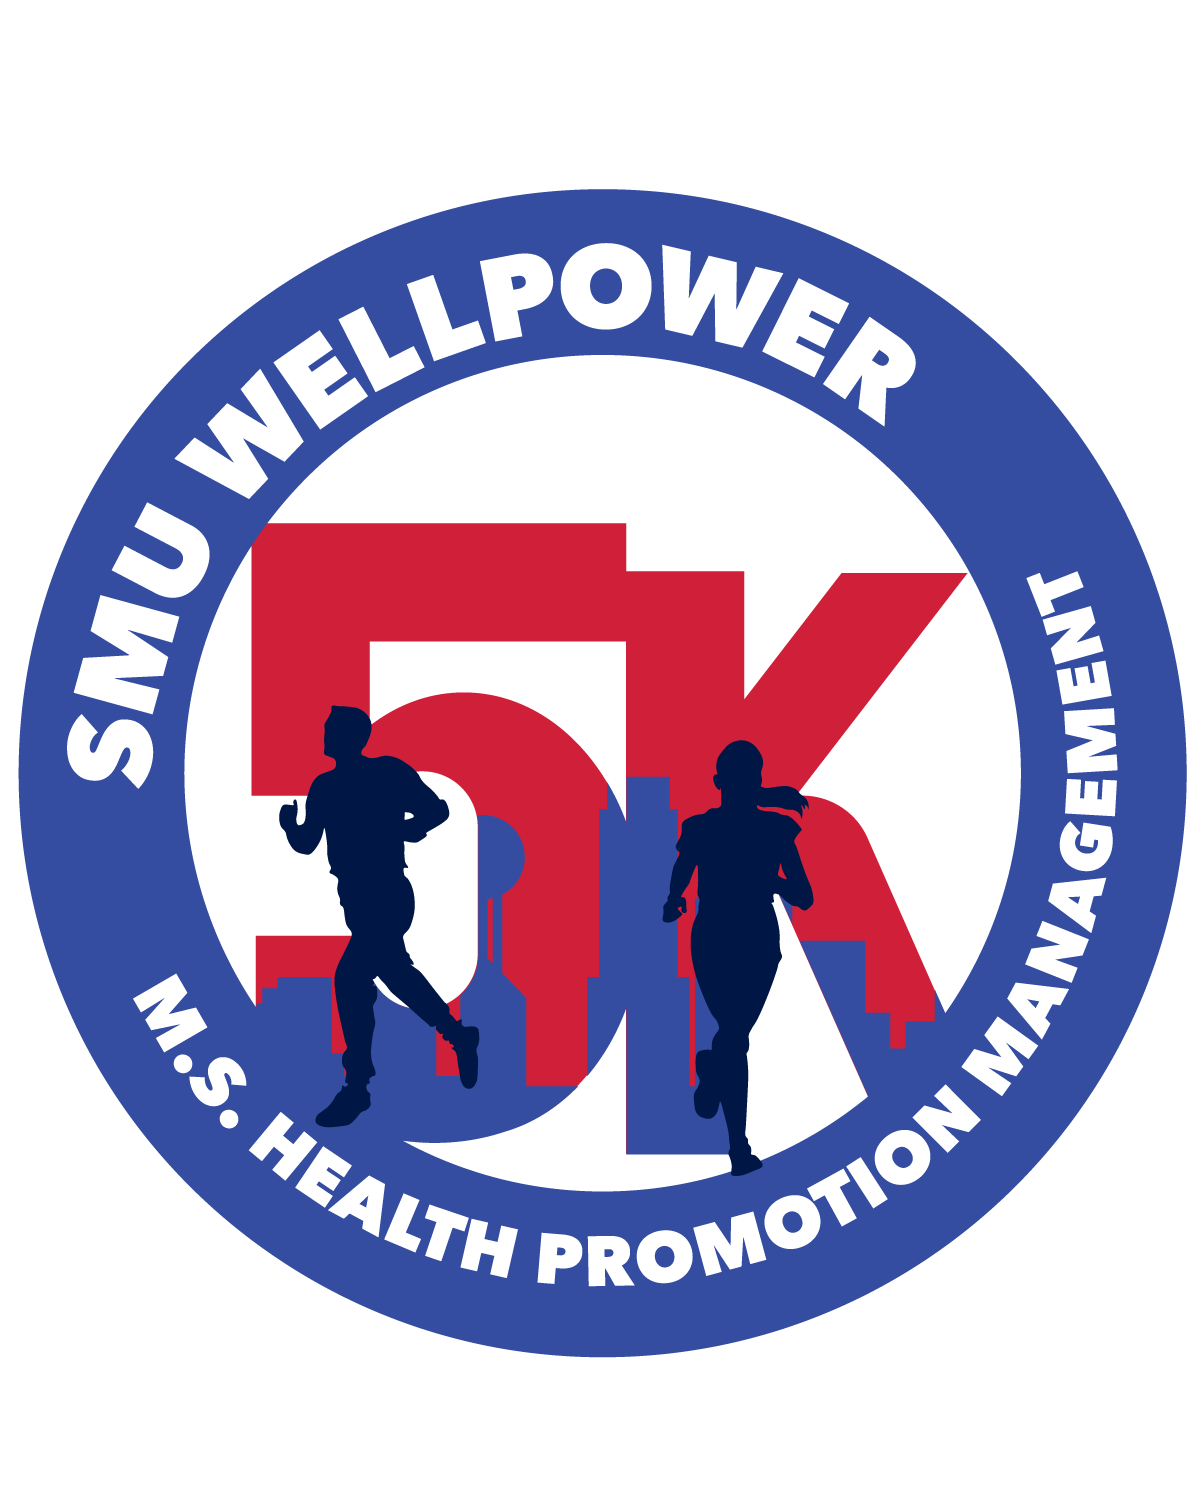 SMU Wellpower M.S. Health Promotion Management